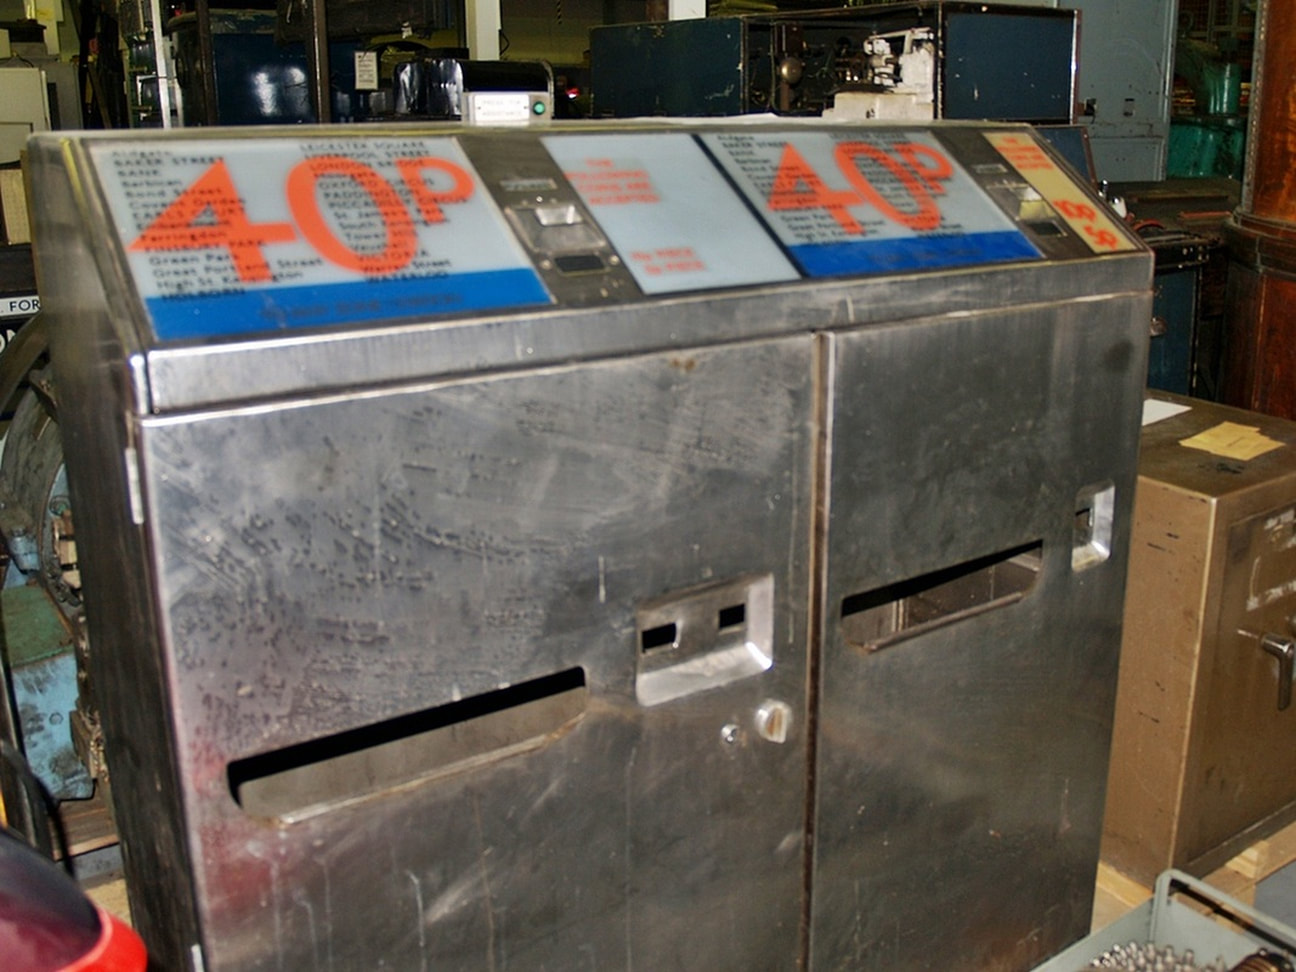 Disused tube ticket machines 40p